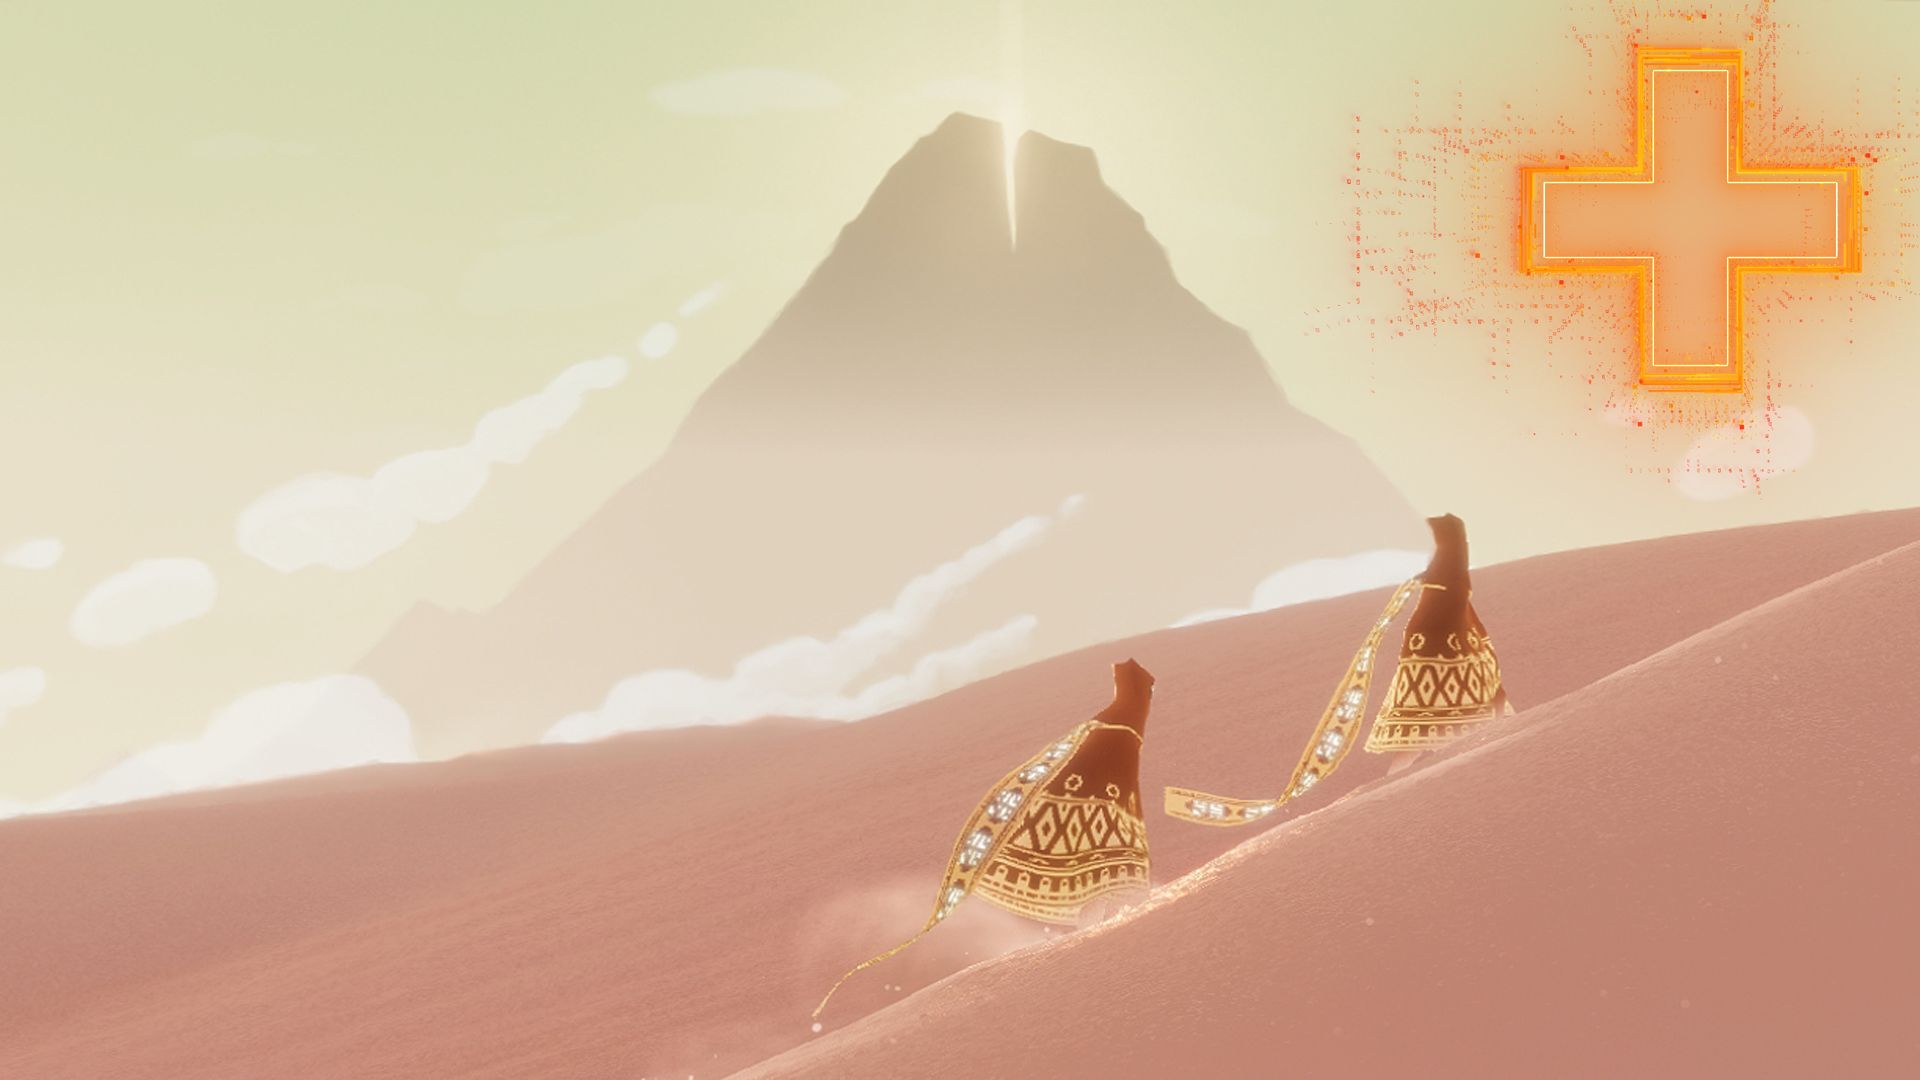 Journeys сайт. Journey игра. Journey (игра, 2012). Journey пустыня ps4 Скриншоты thatgamecompany. Джорни путешествие игра.